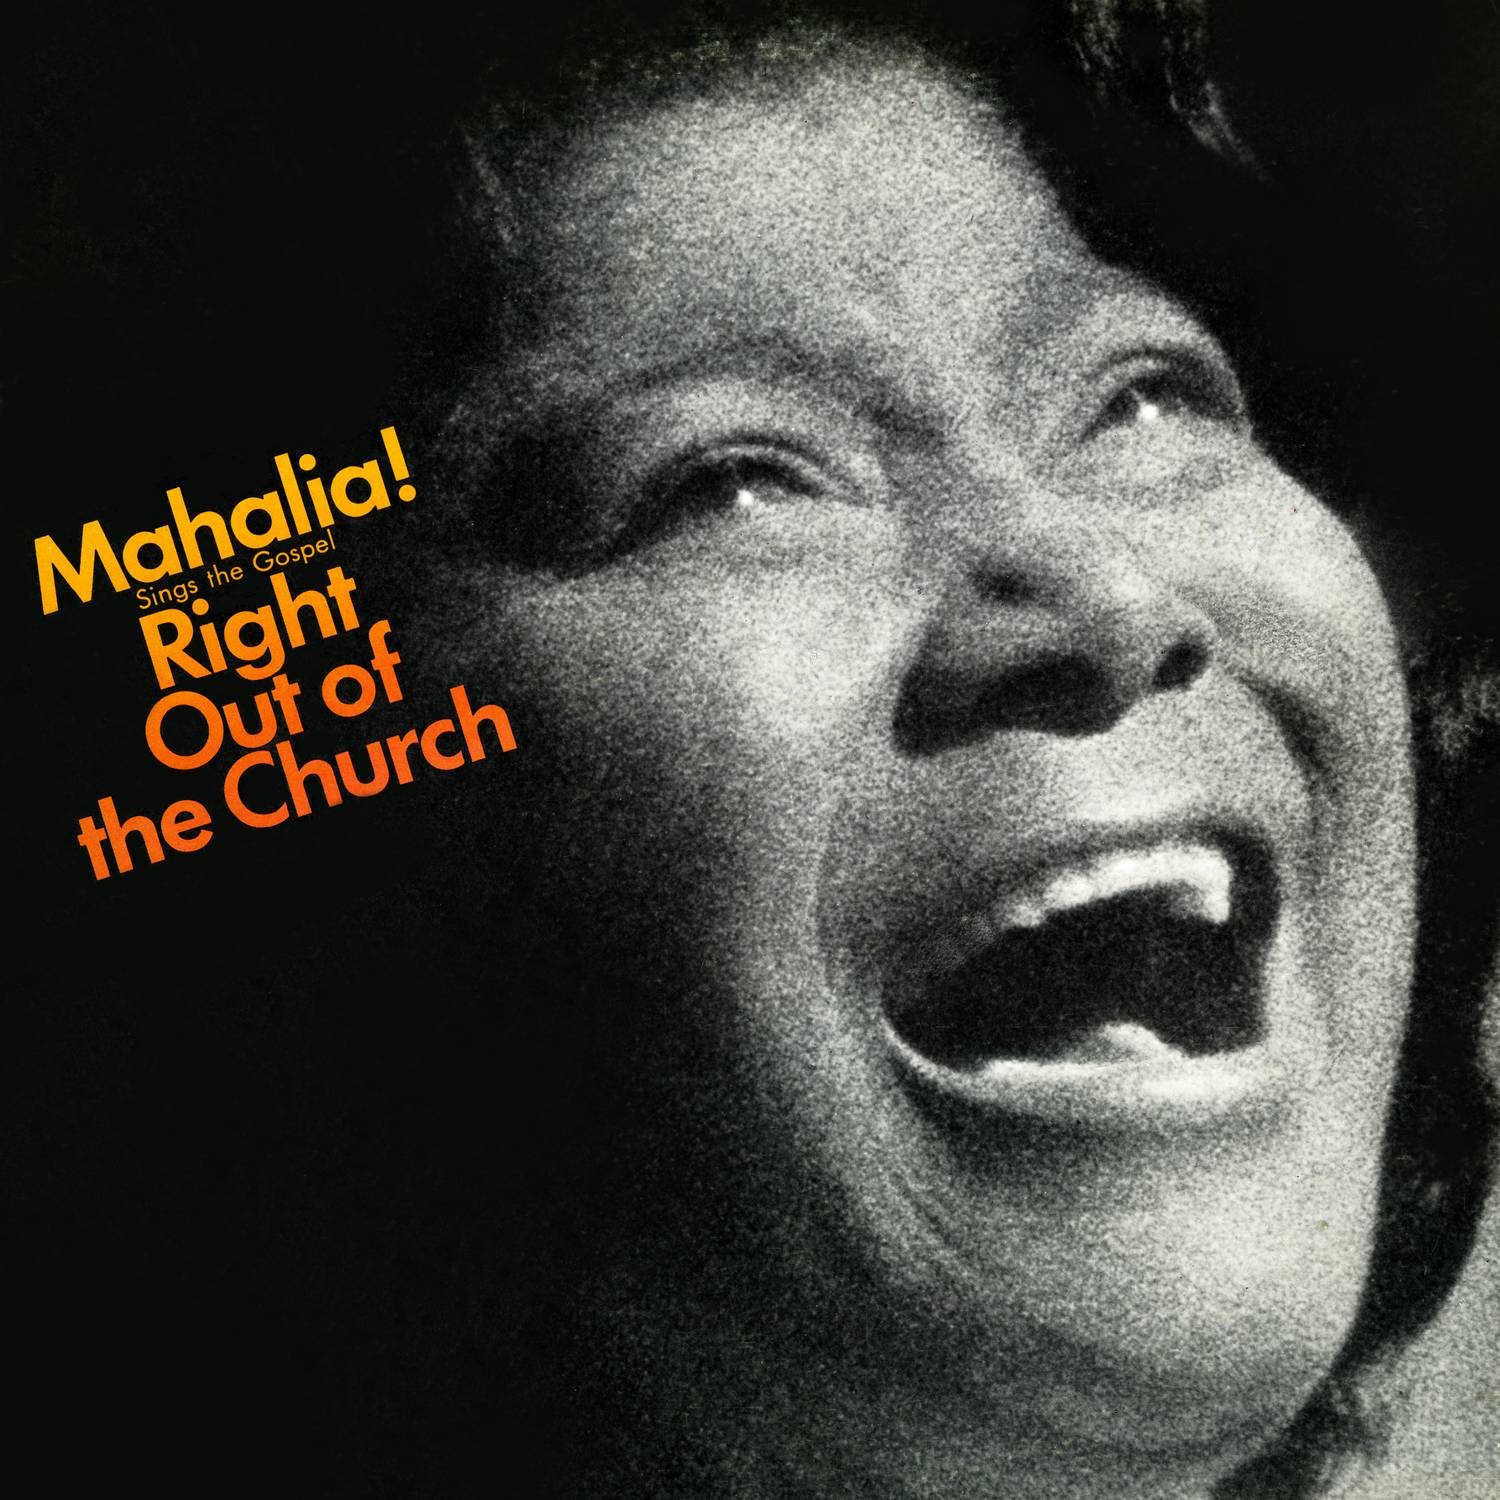 Mahalia Jackson - Mahalia Sings The Gospel Right Out Of The Church (1969/2015) [AcousticSounds FLAC 24bit/192kHz]